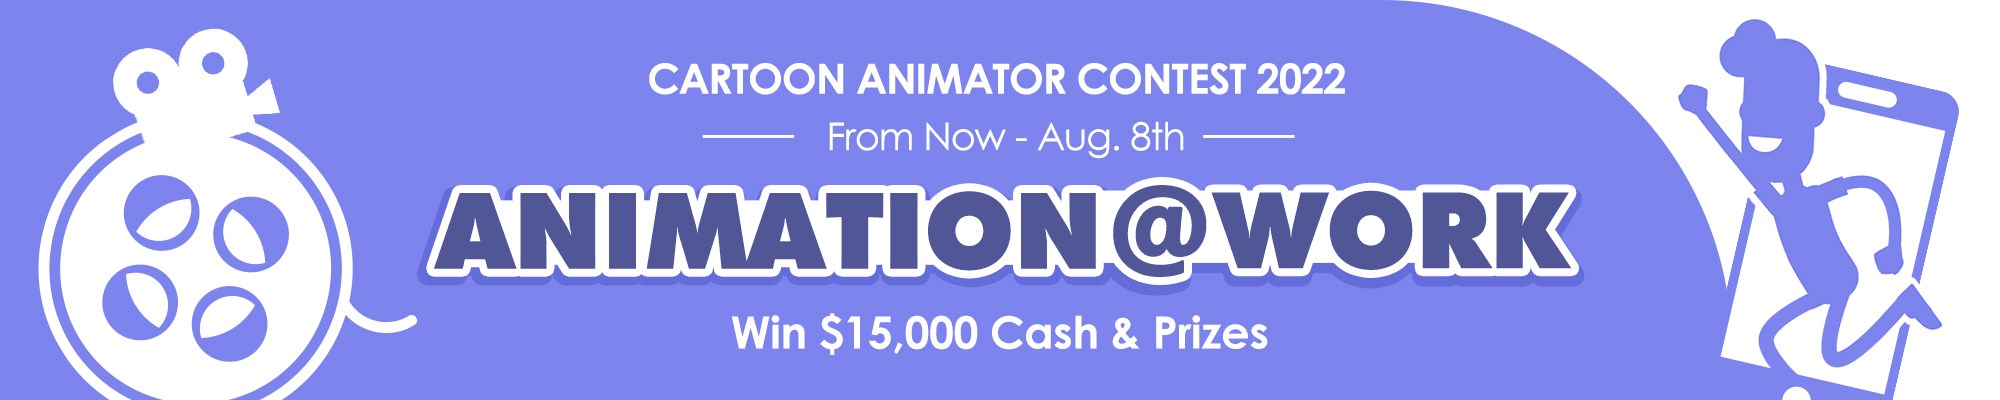 Cartoon Animator Contest 2022 - Animation At Work